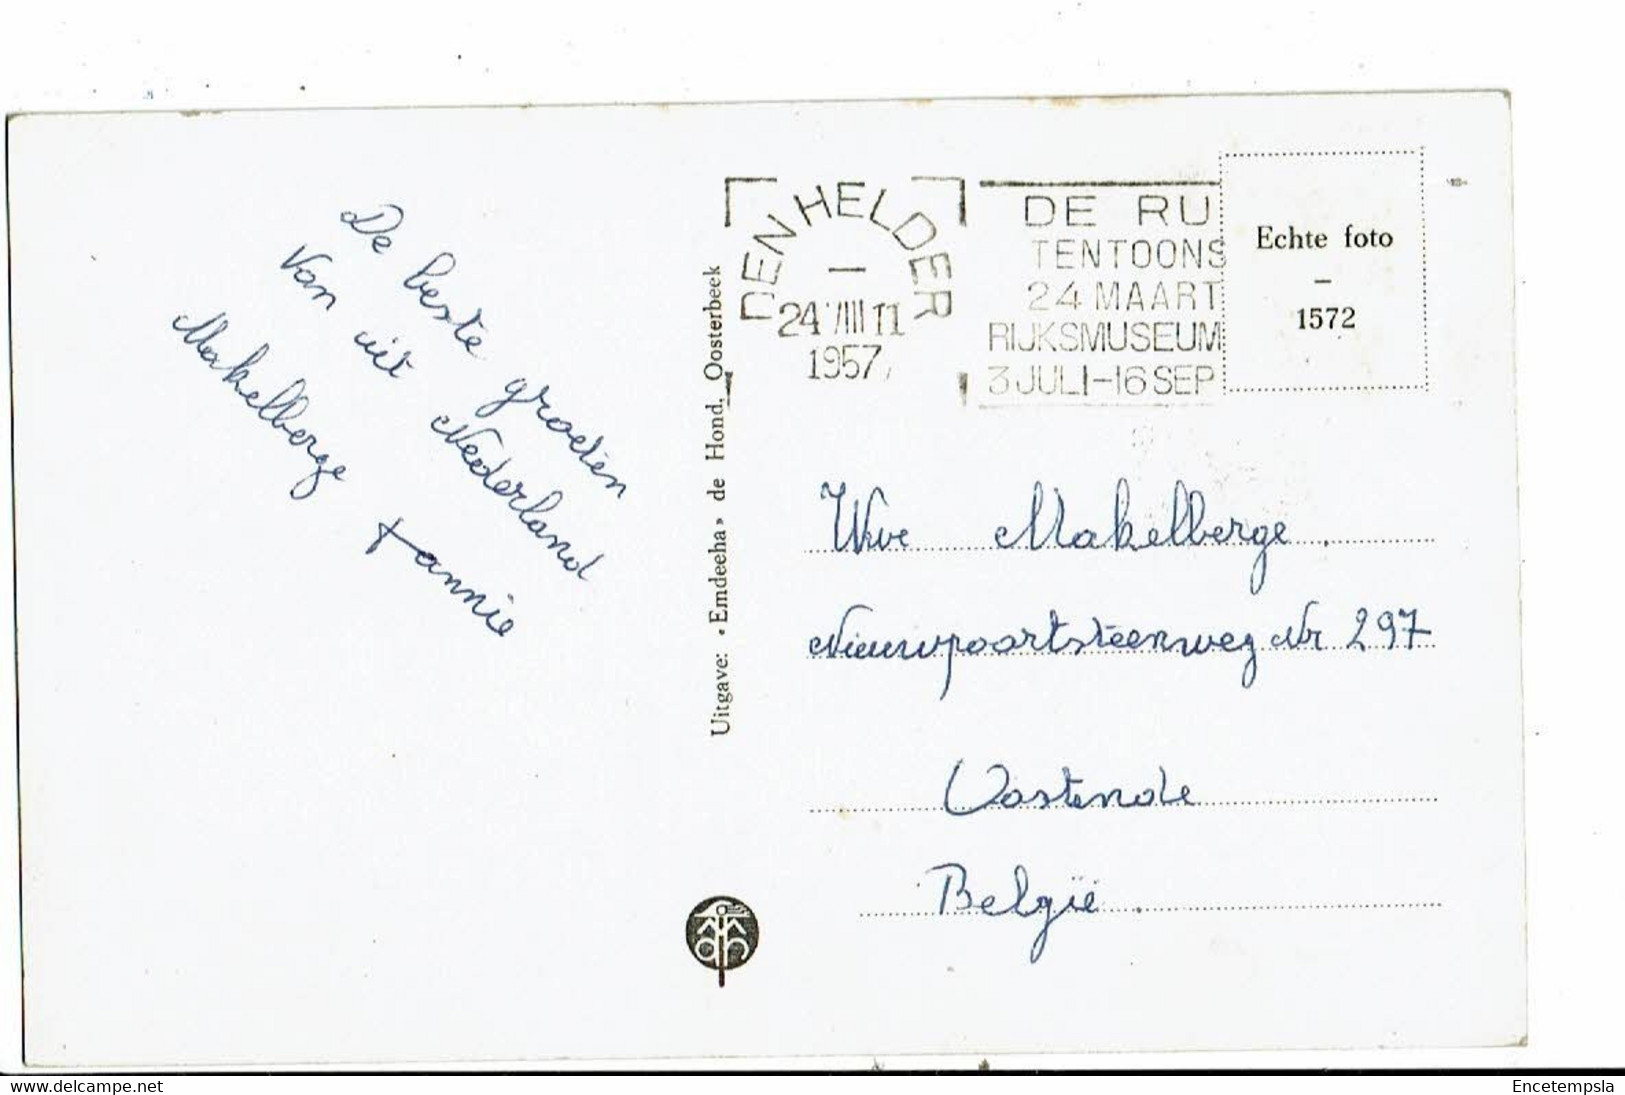 CPA-cartes Postale Pays Bas- Den Helder- Luchtdoelartillerie Schietkamp Ingang 1957-VM23022br - Den Helder